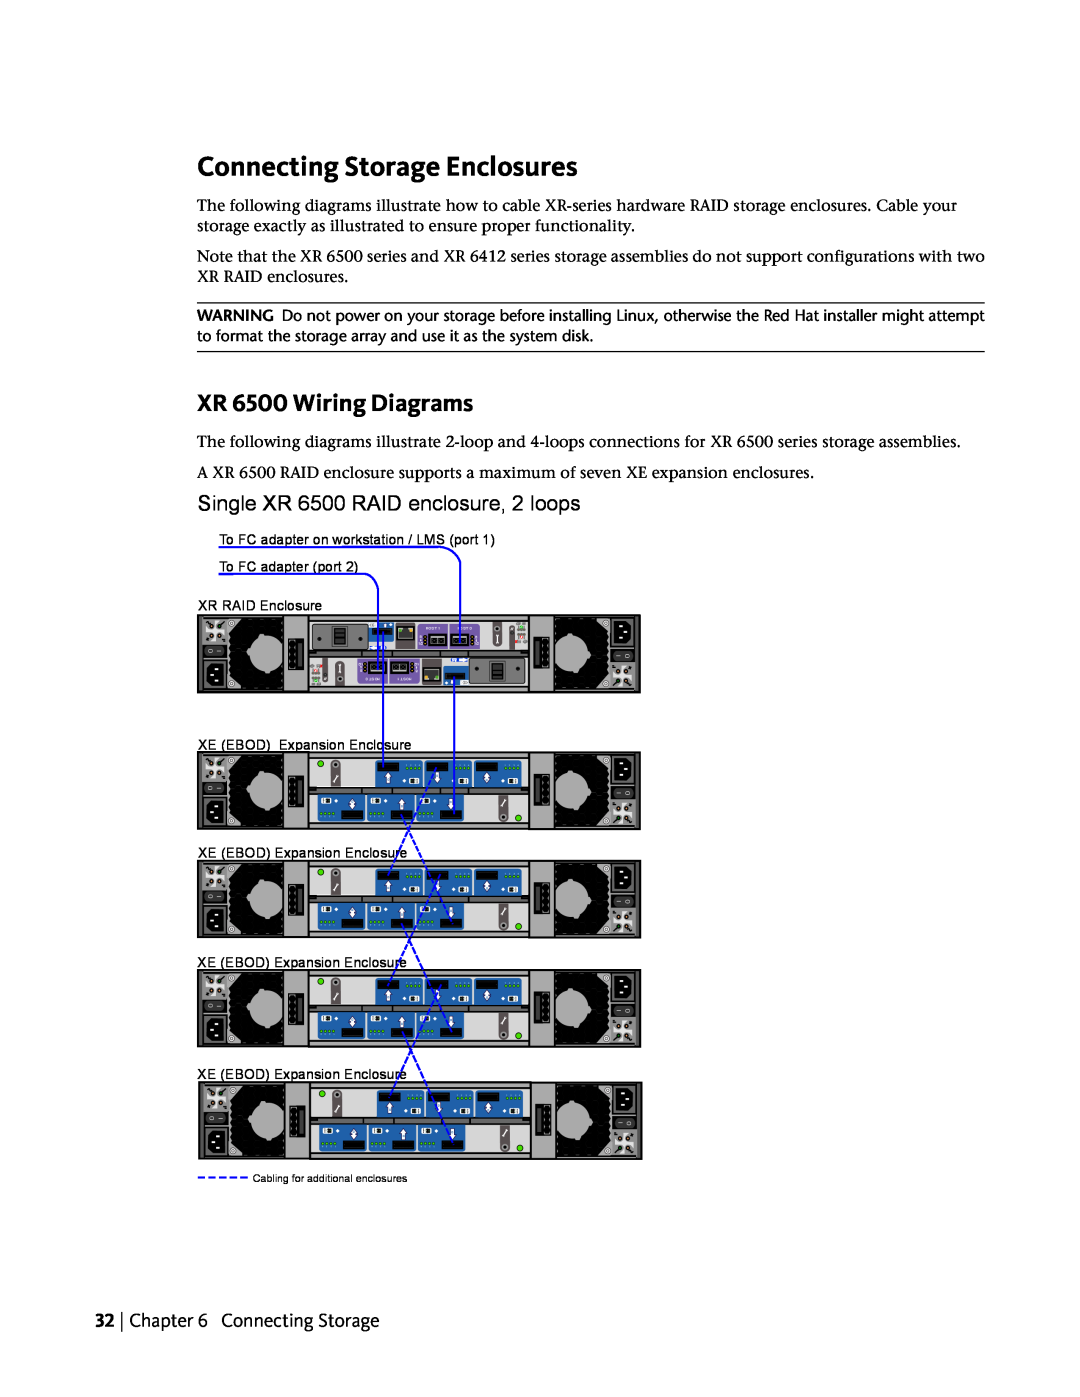 HP Z800 manual Connecting Storage Enclosures, XR 6500 Wiring Diagrams, Single XR 6500 RAID enclosure, 2 loops 